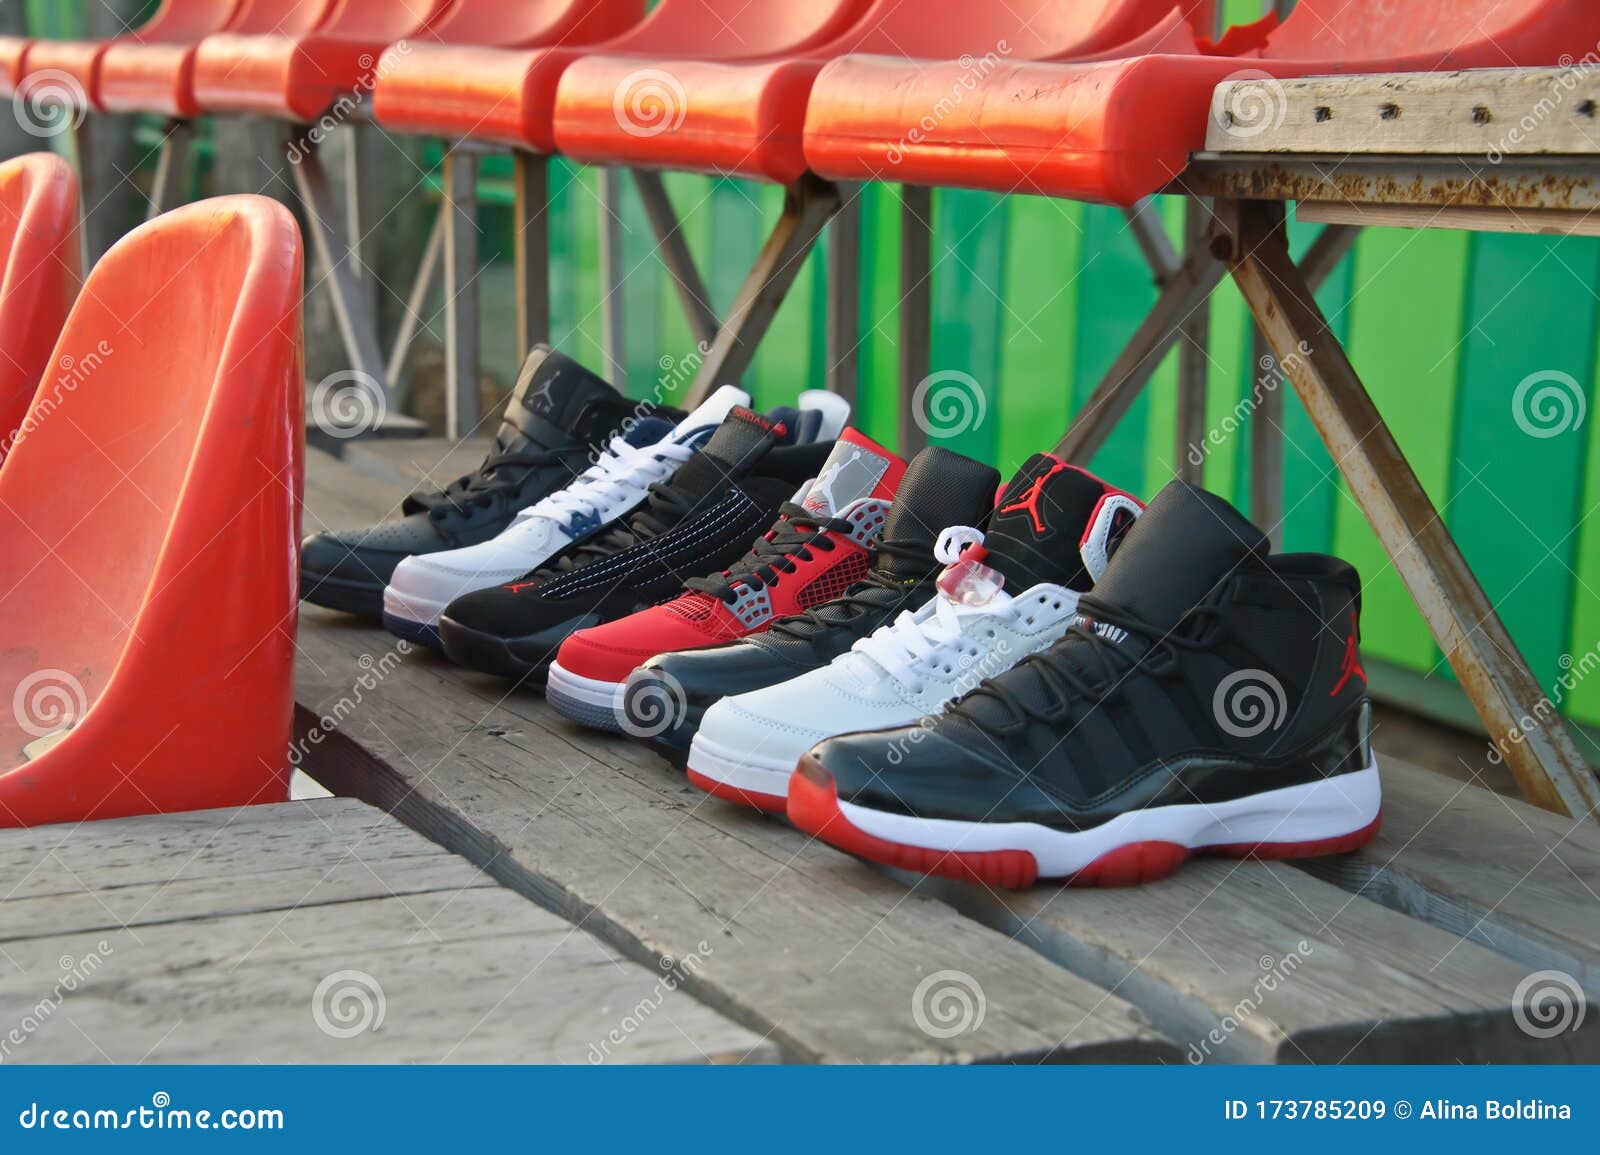 jordan basketball shoes 2015